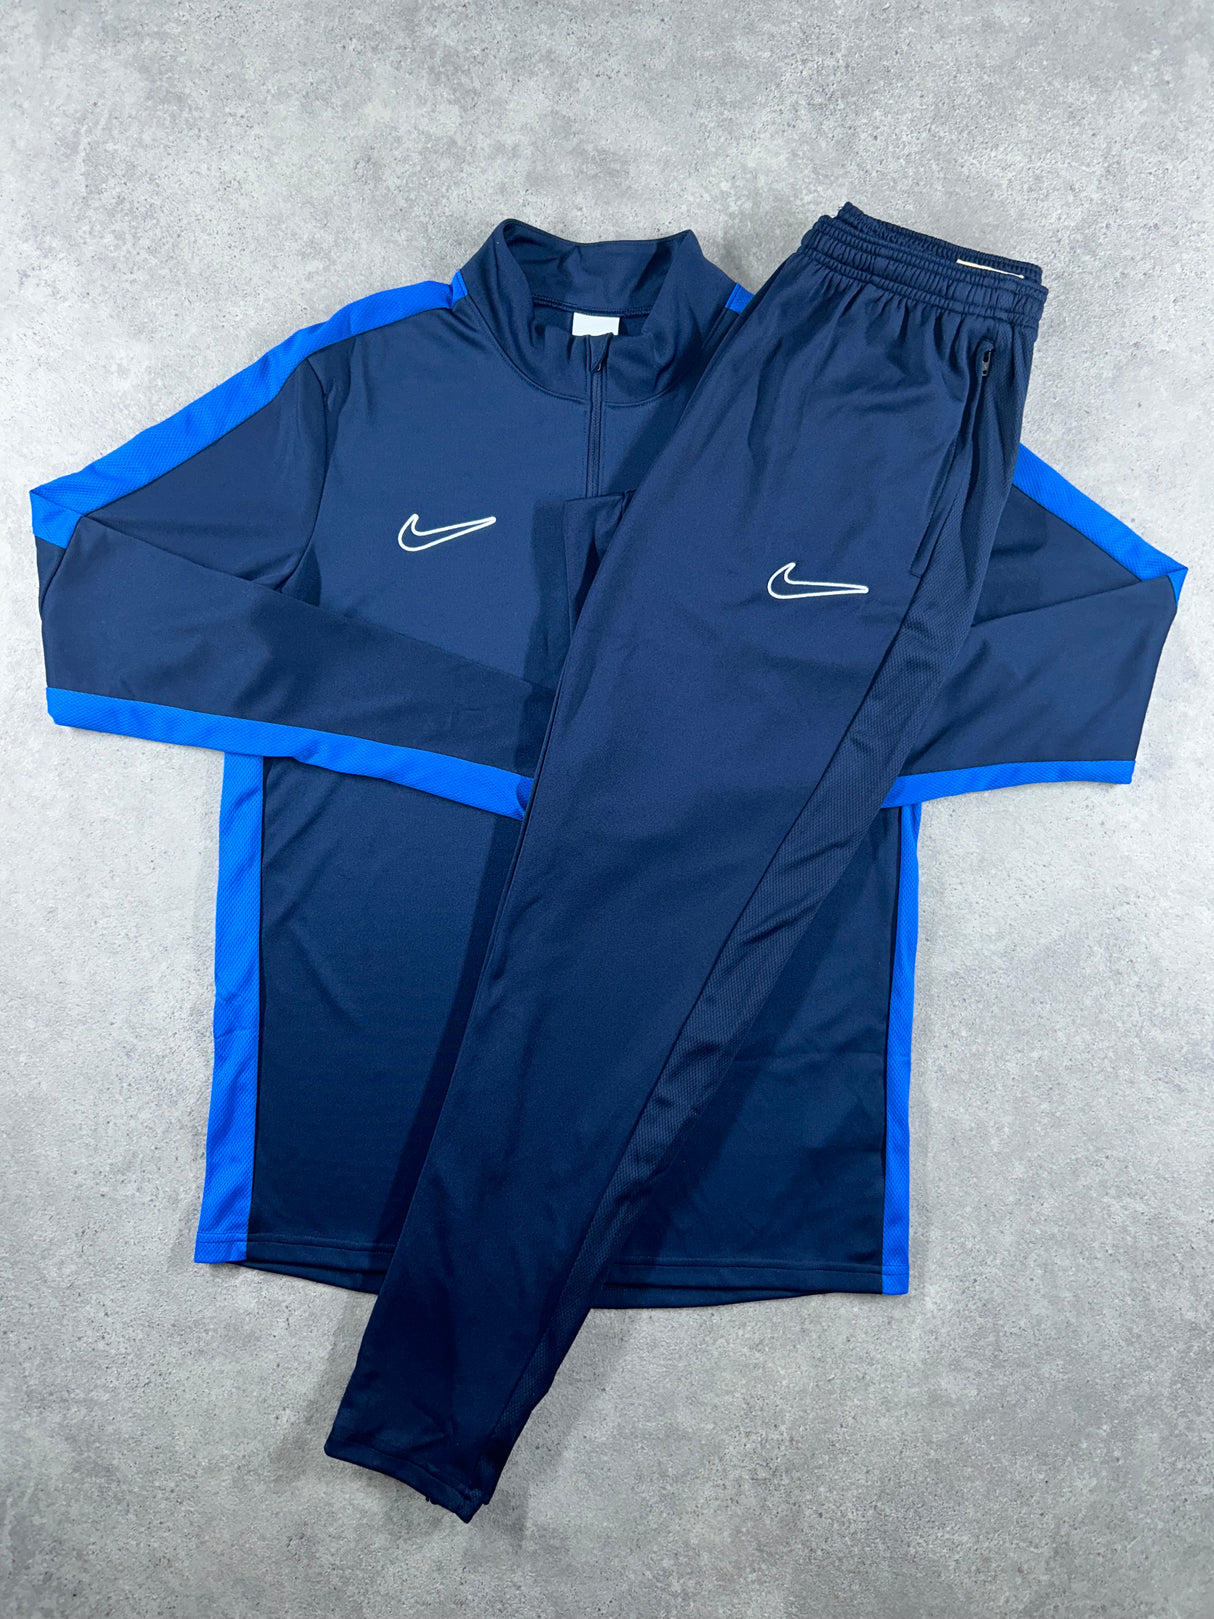 Nike - Gym ‘23 Tracksuit - Obsidian/Royal Blue